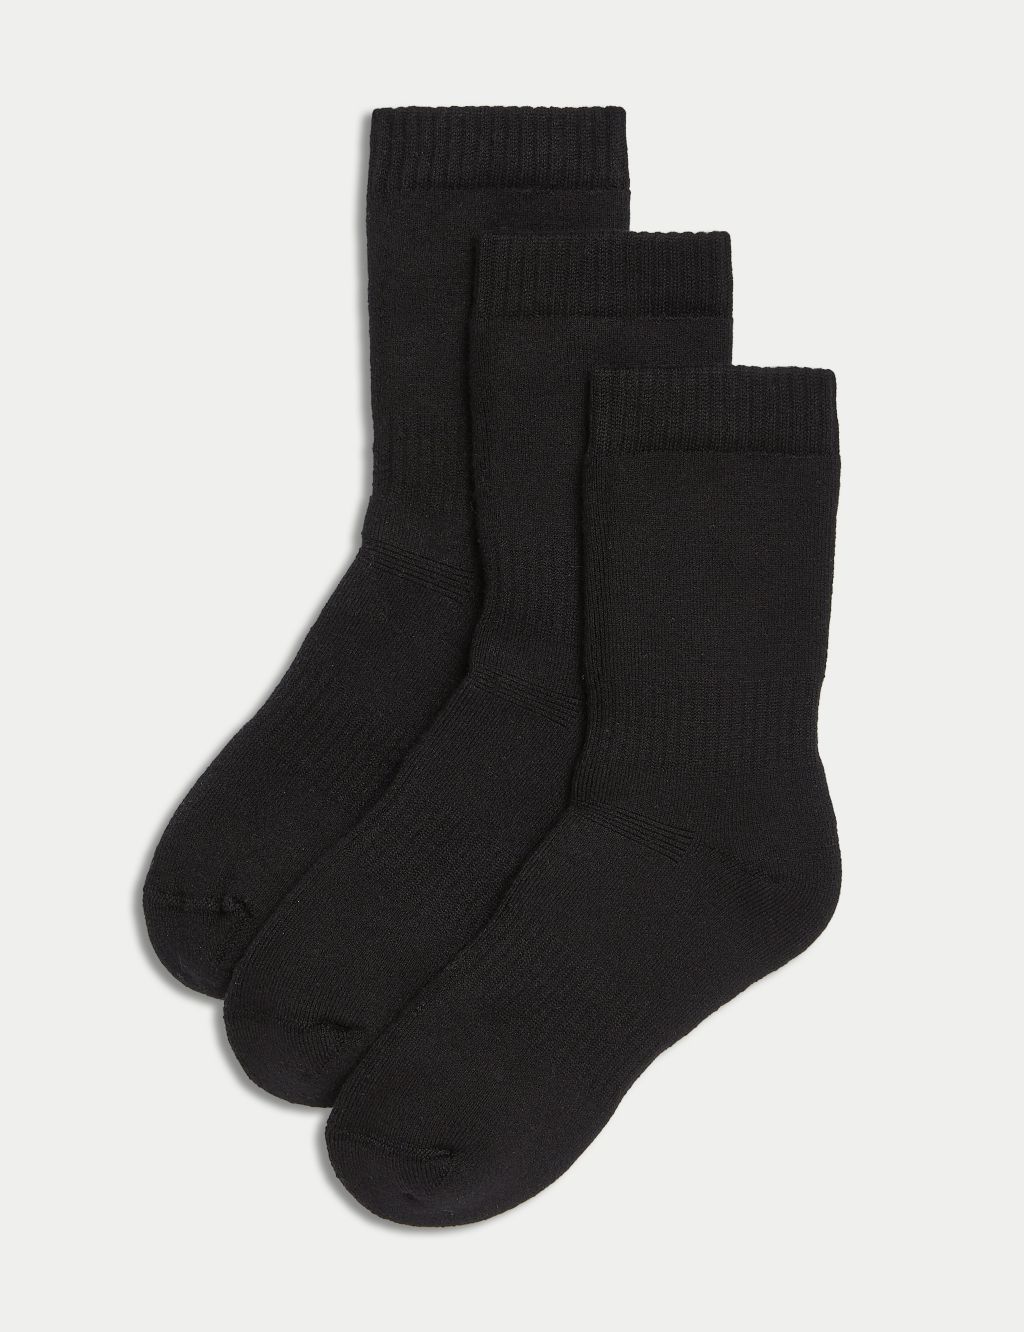 3pk Cotton Blend Thermal Socks image 1